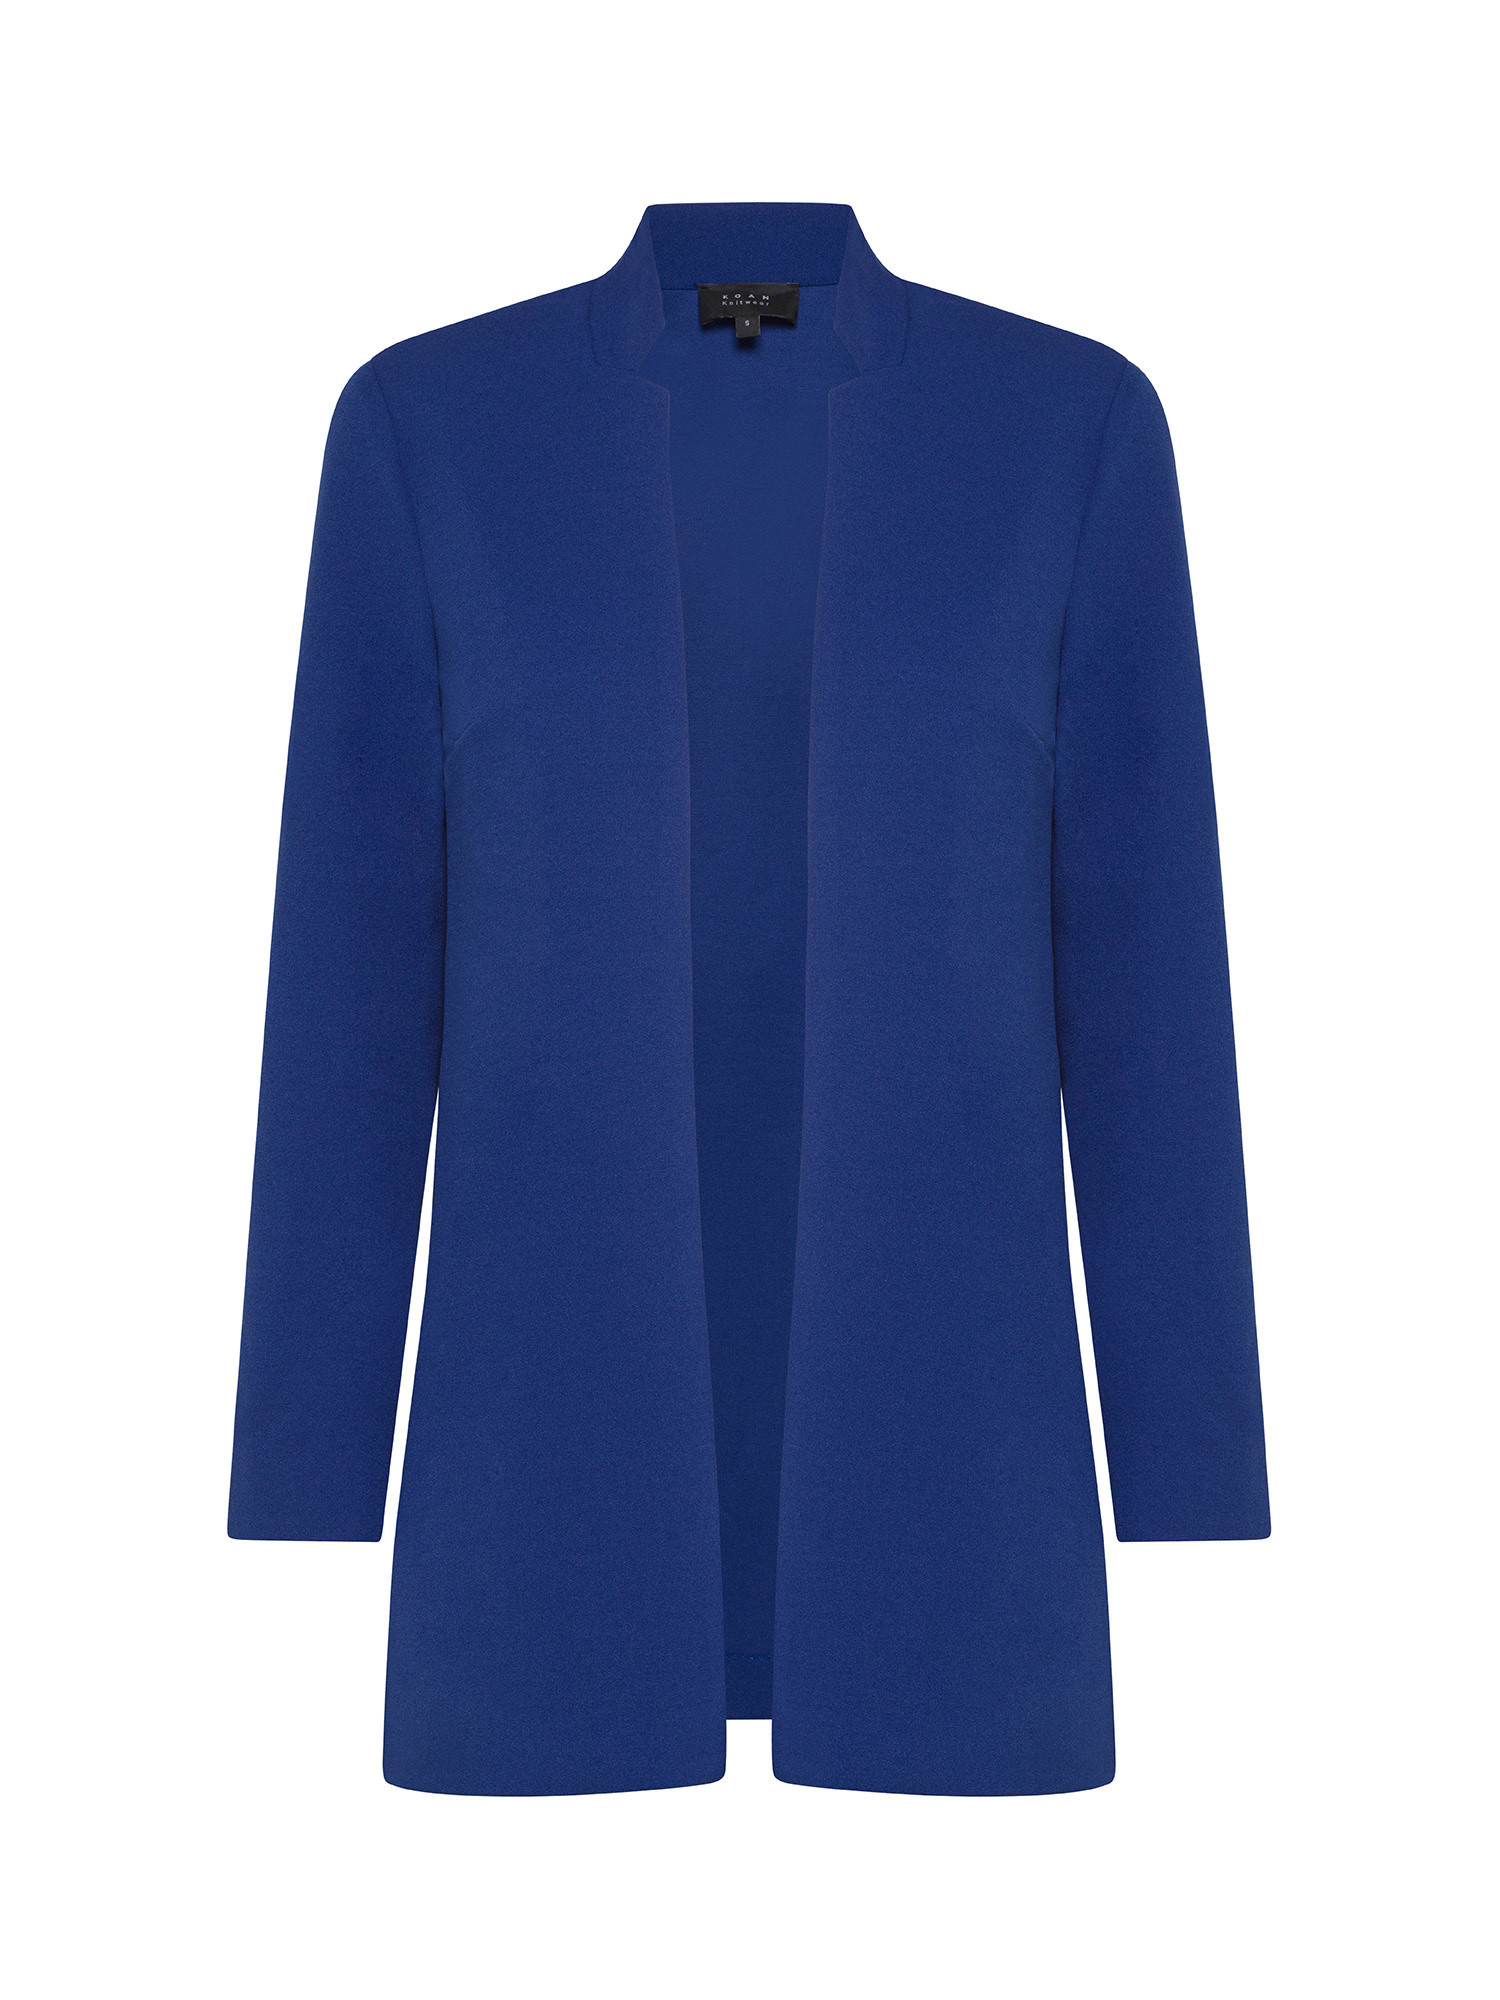 Koan - Long crepe jacket, Royal Blue, large image number 0